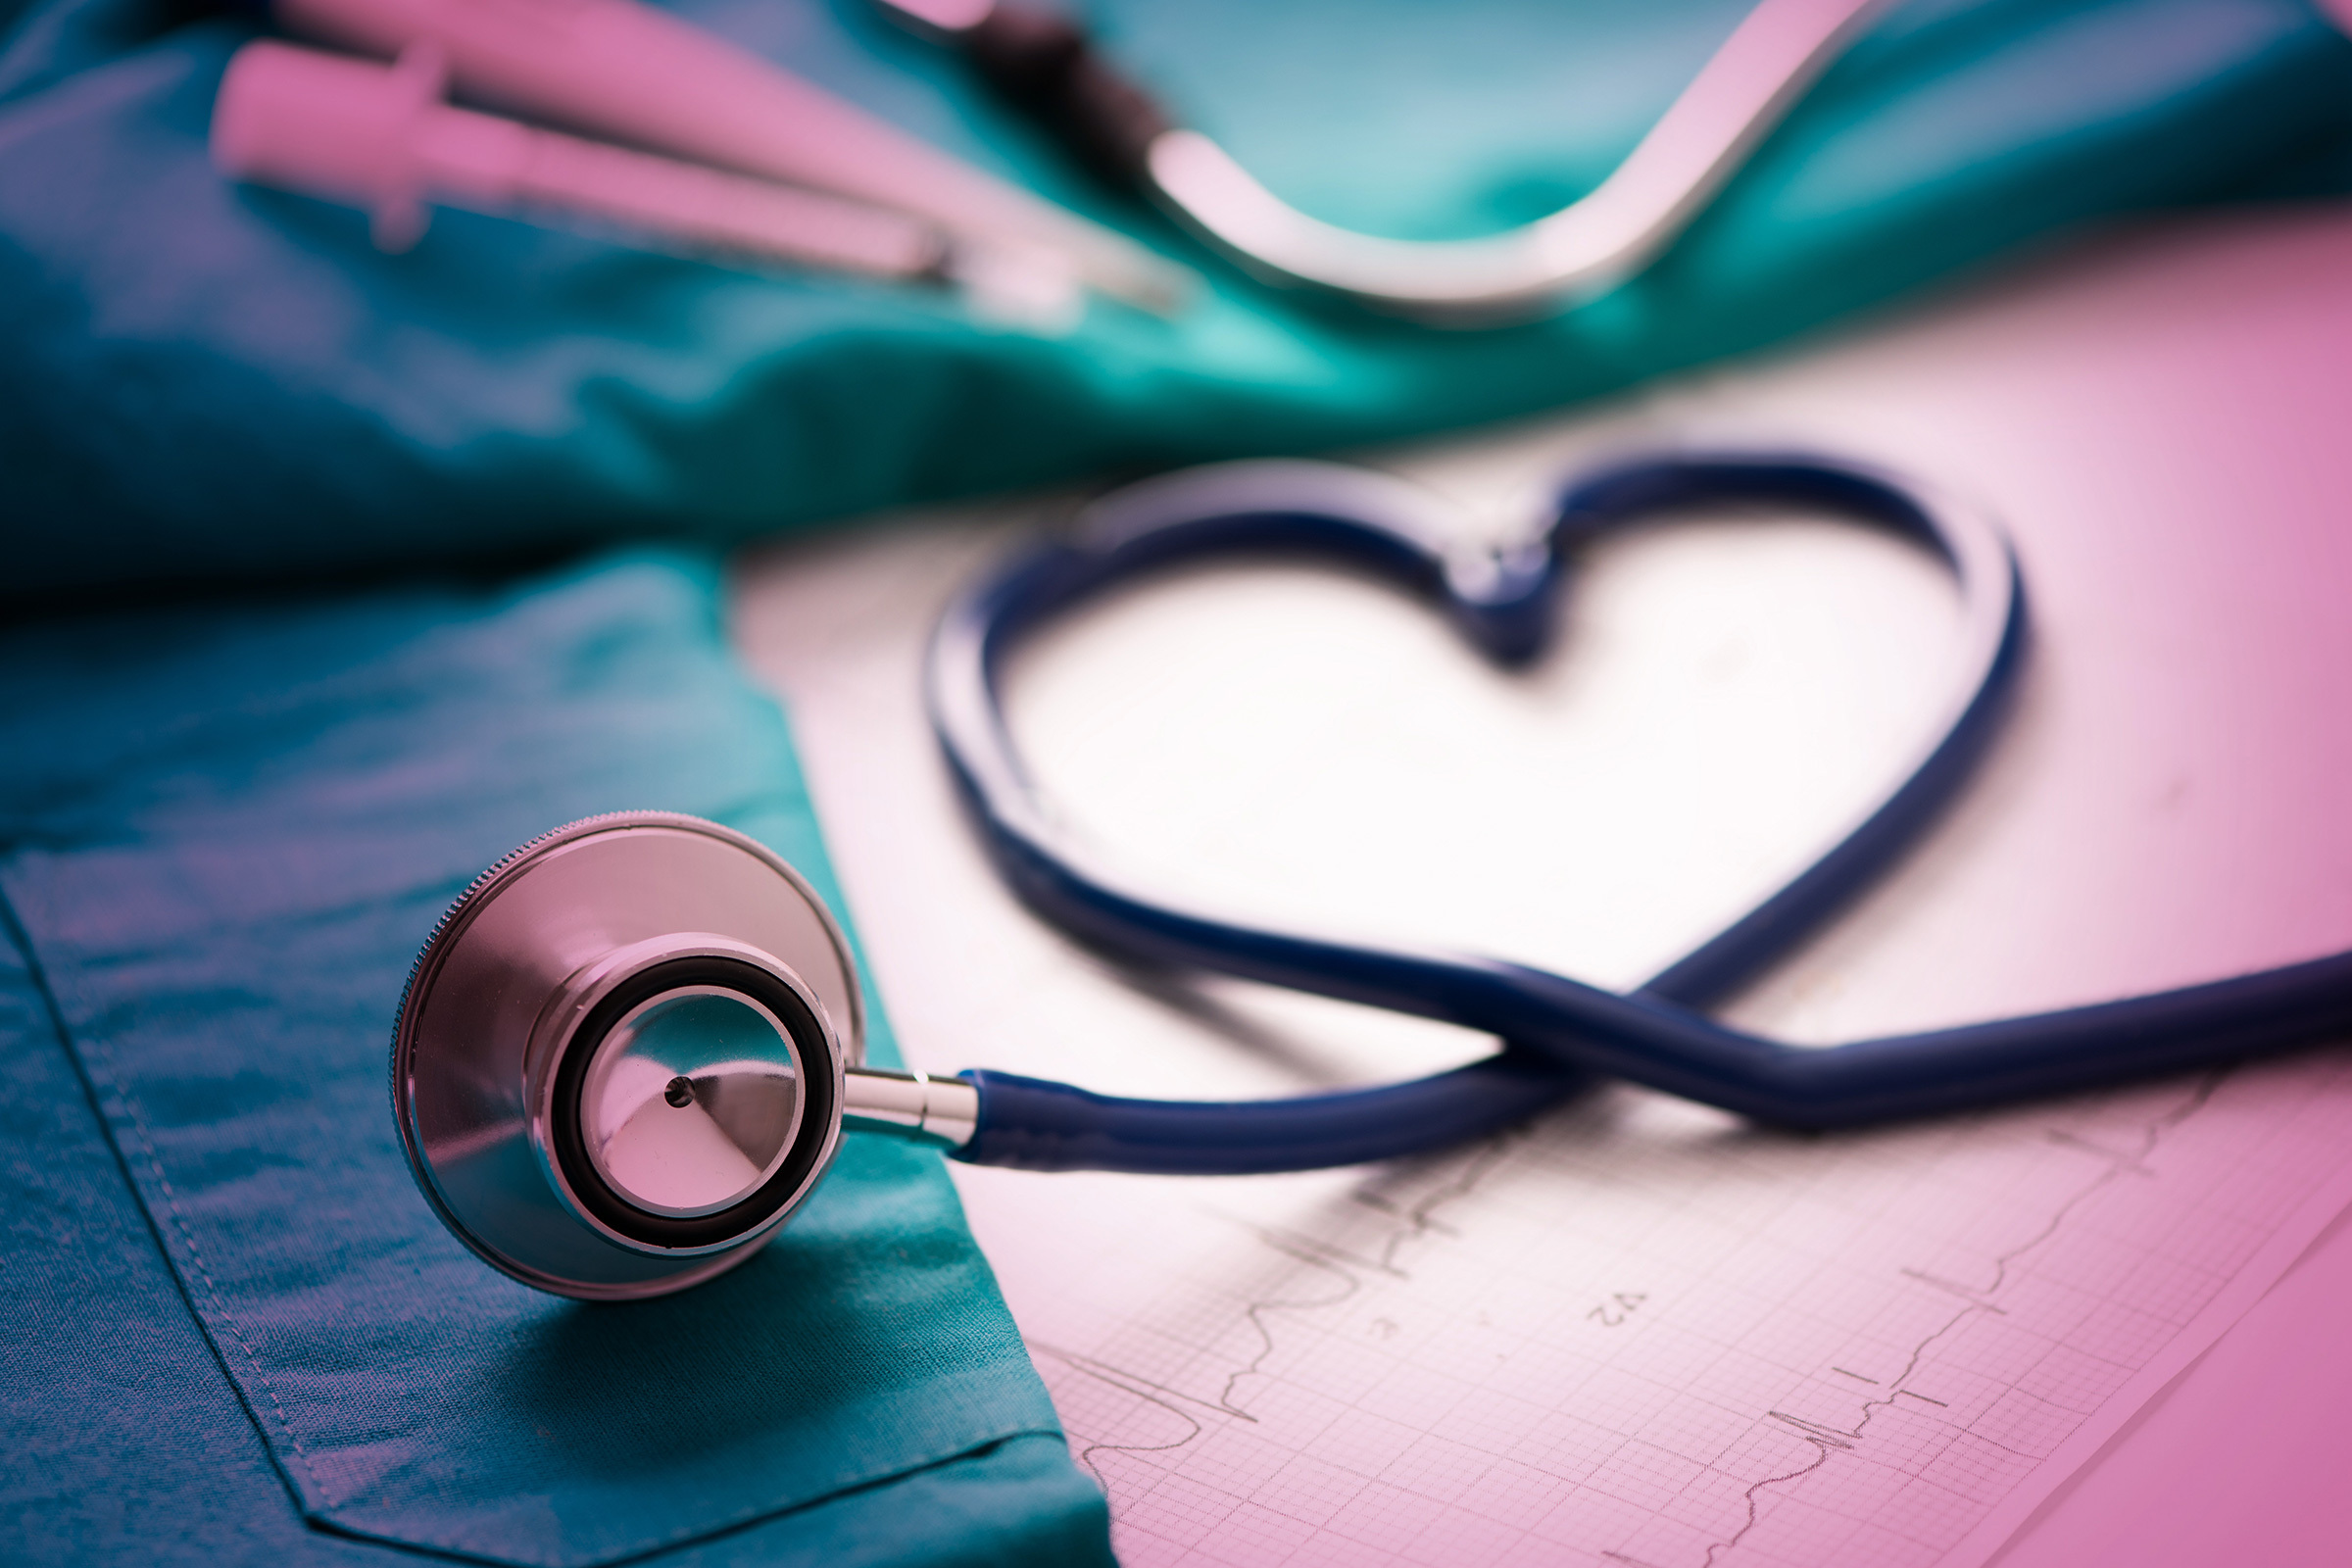 Stethoscope cord in shape of heart